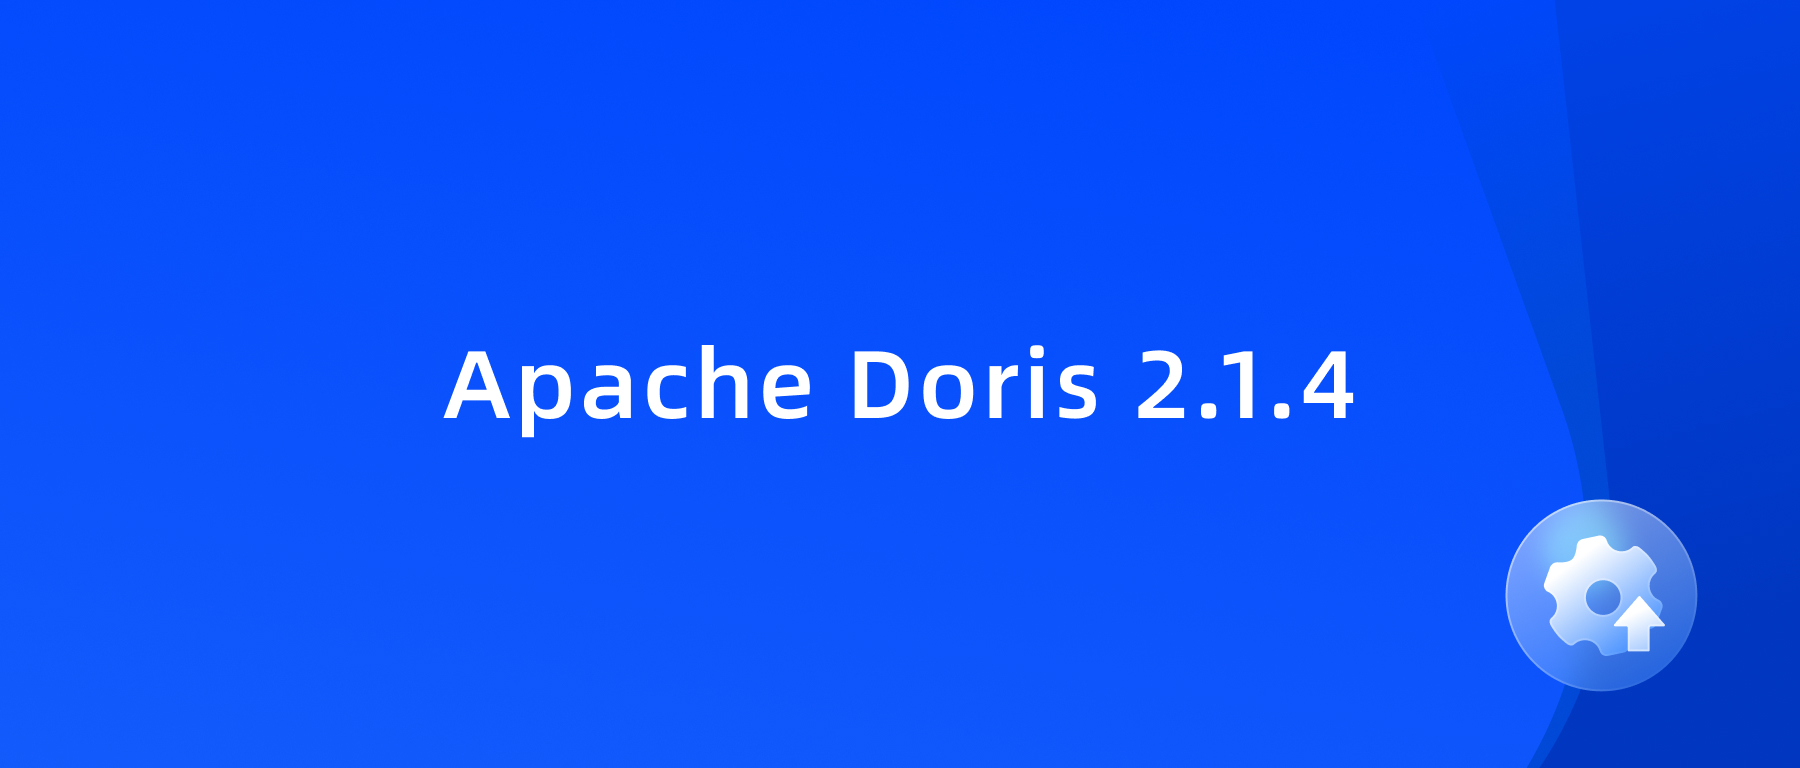 Apache Doris version 2.1.4 just released